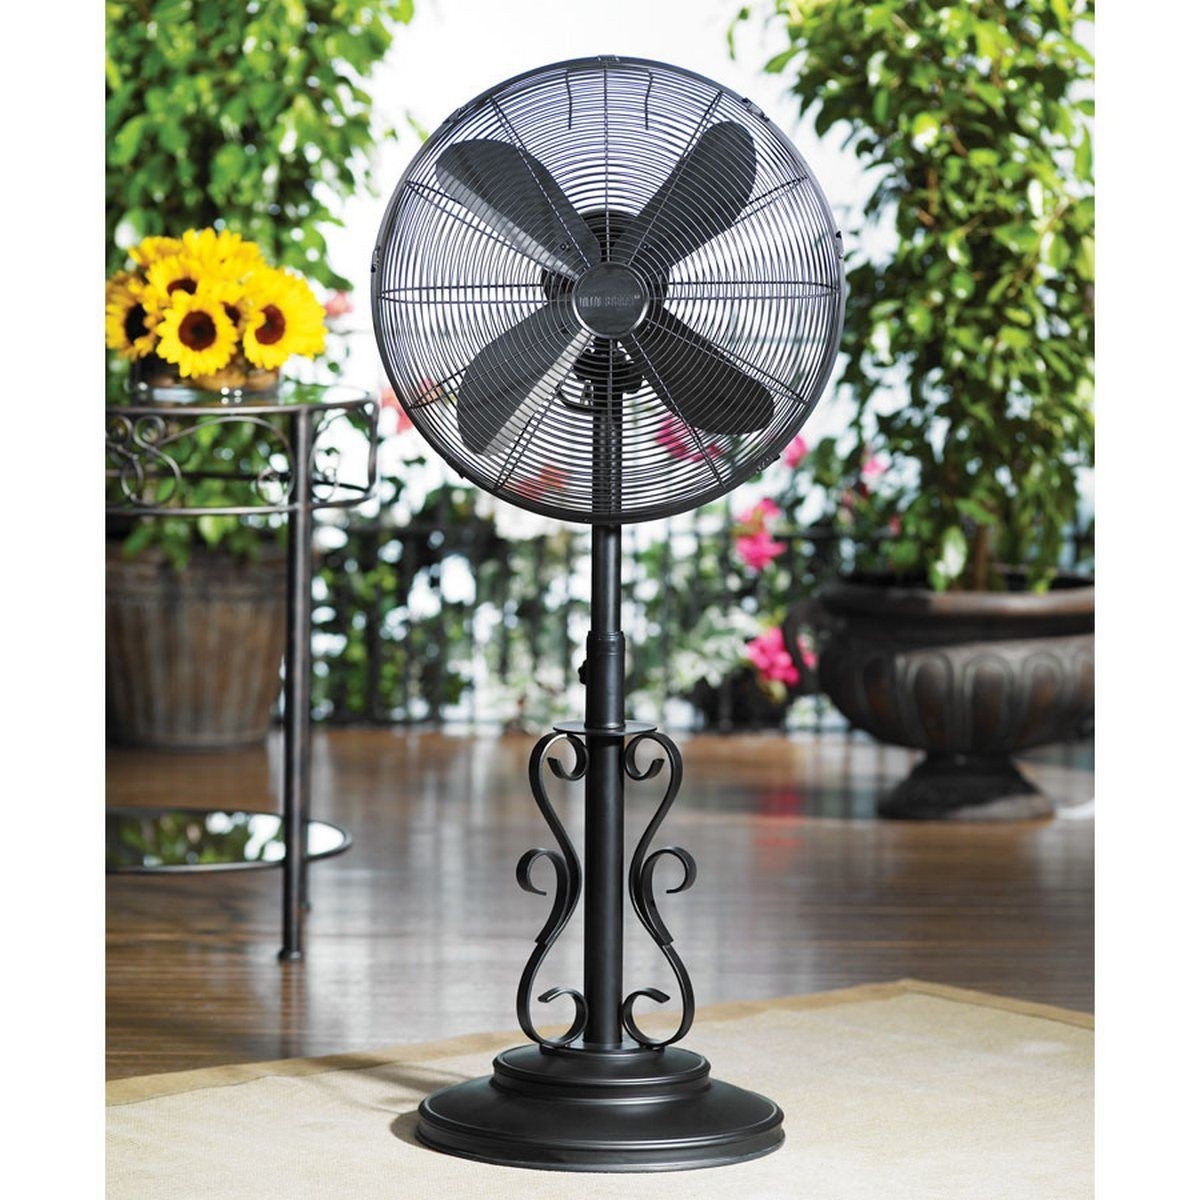 Decorative pedestal fan for massandra outdoor fans patio